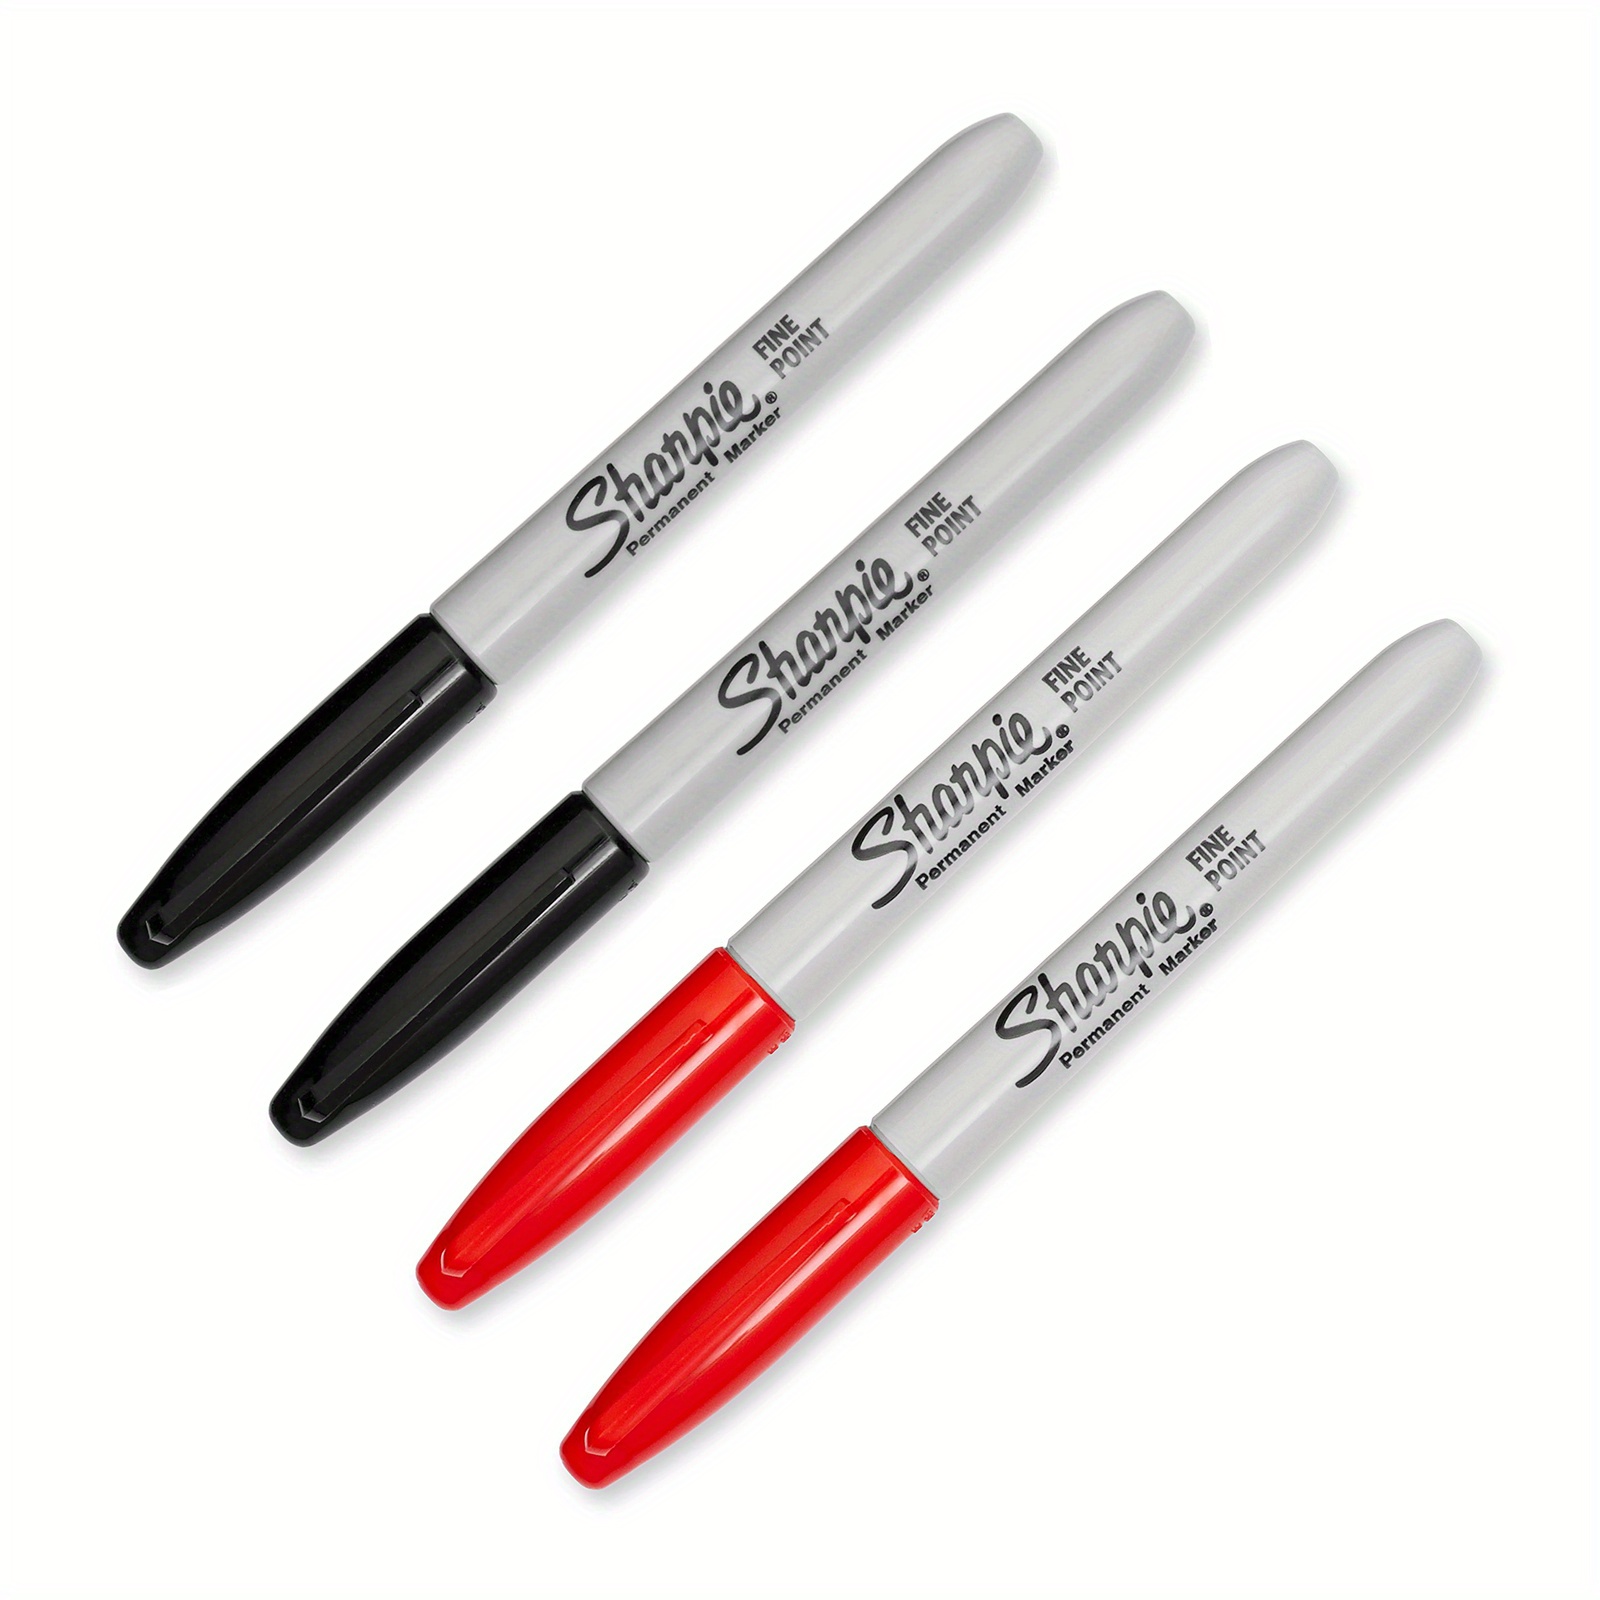 4pcs Mini Permanent Markers Pen Black Blue Red Ink Golf Ball